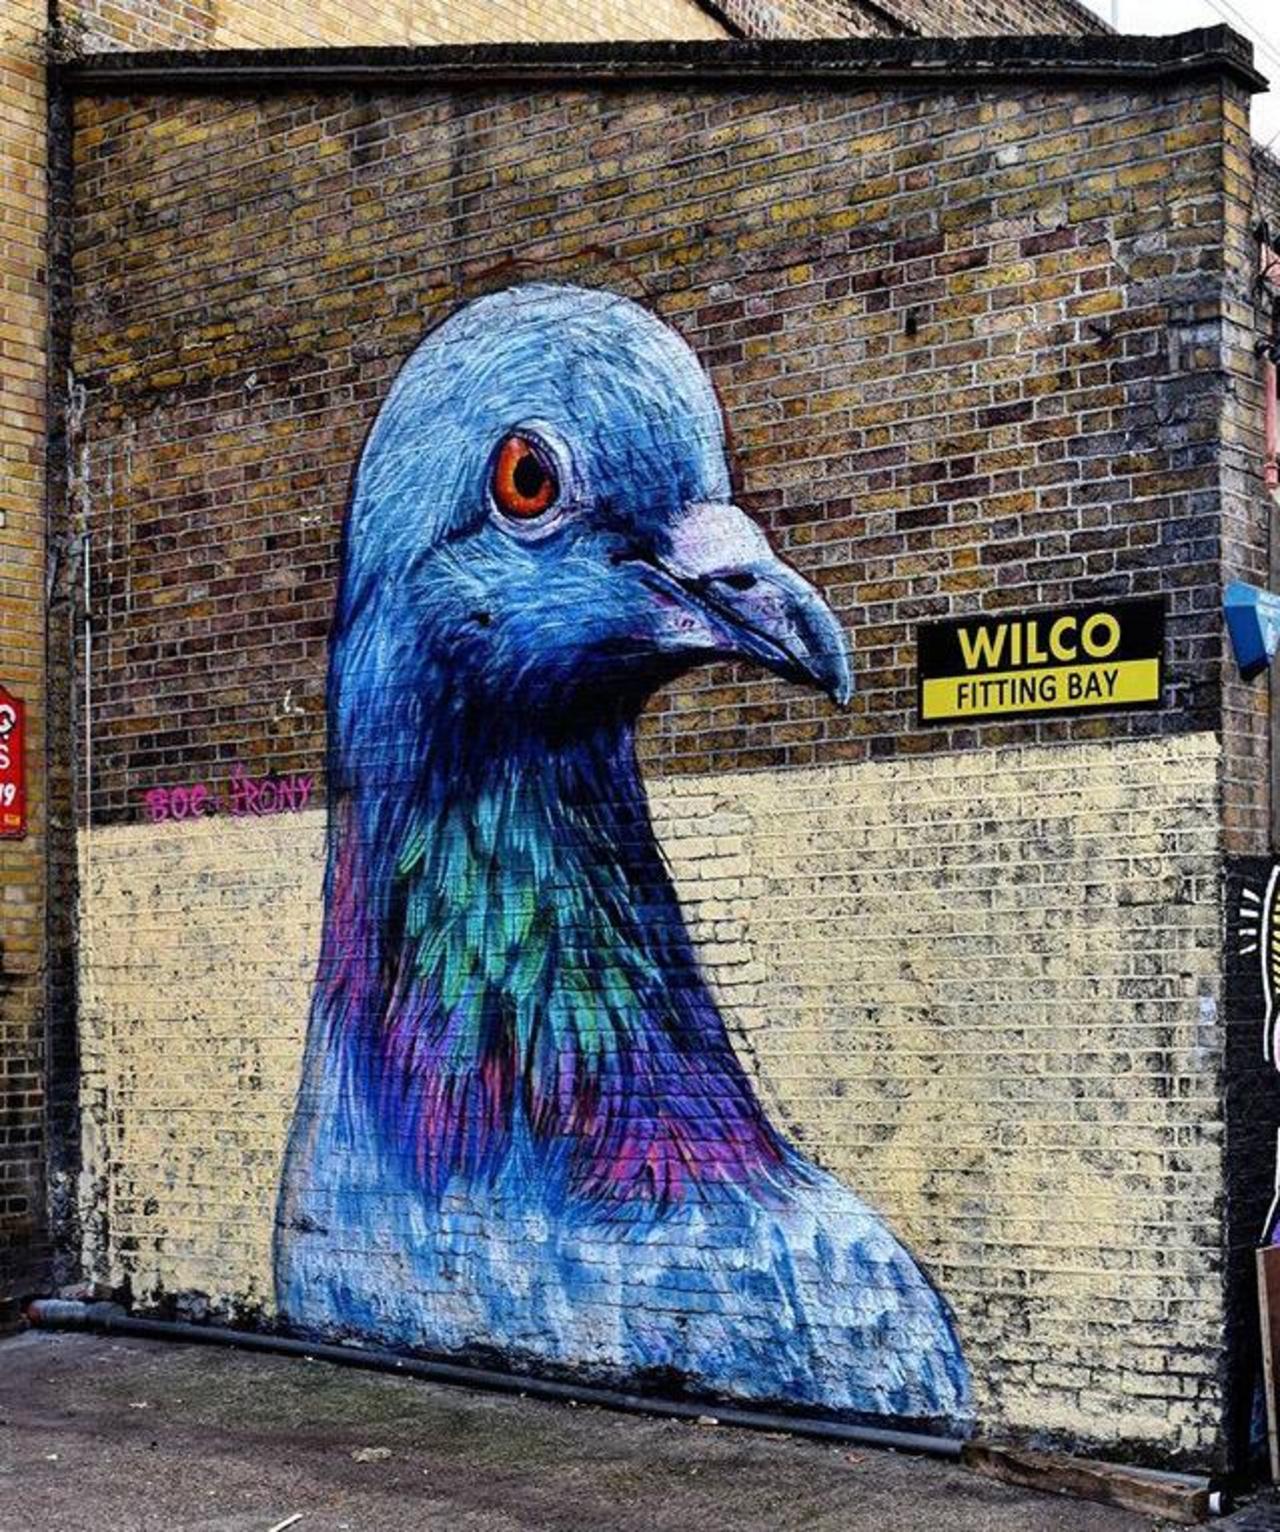 ＠Kanta_1123 ＠kanta_1123 だいすきよー　Street Art by Placee Boe & whoamirony in London 

#art #graffiti #mural #streetart http://t.co/rzCP4p9gcQ …